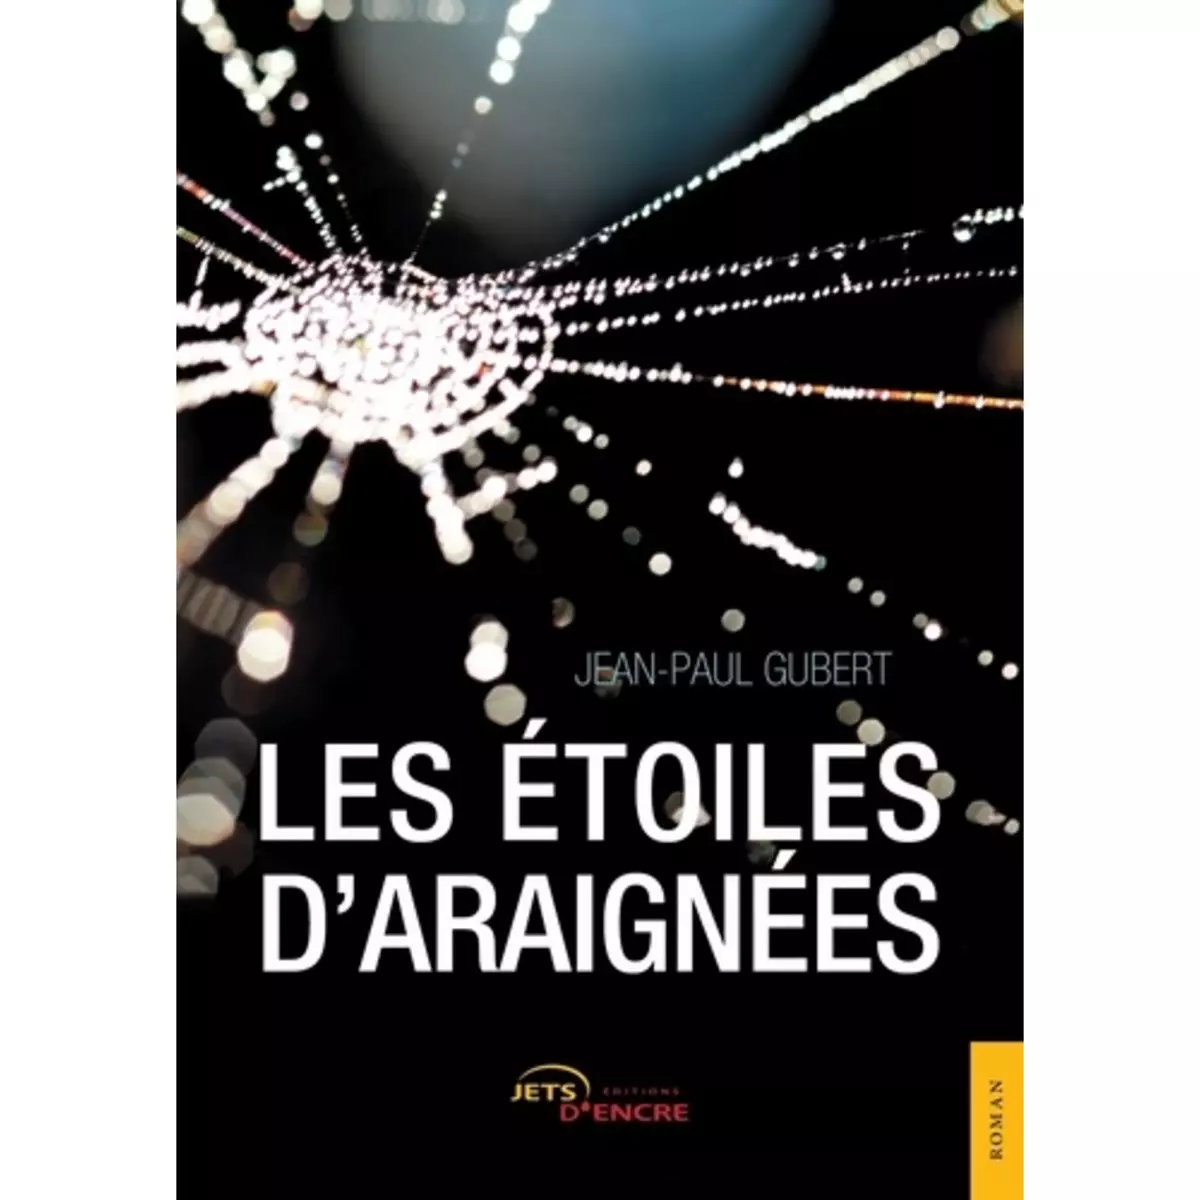  LES ETOILES D'ARAIGNEES, Gubert Jean-paul